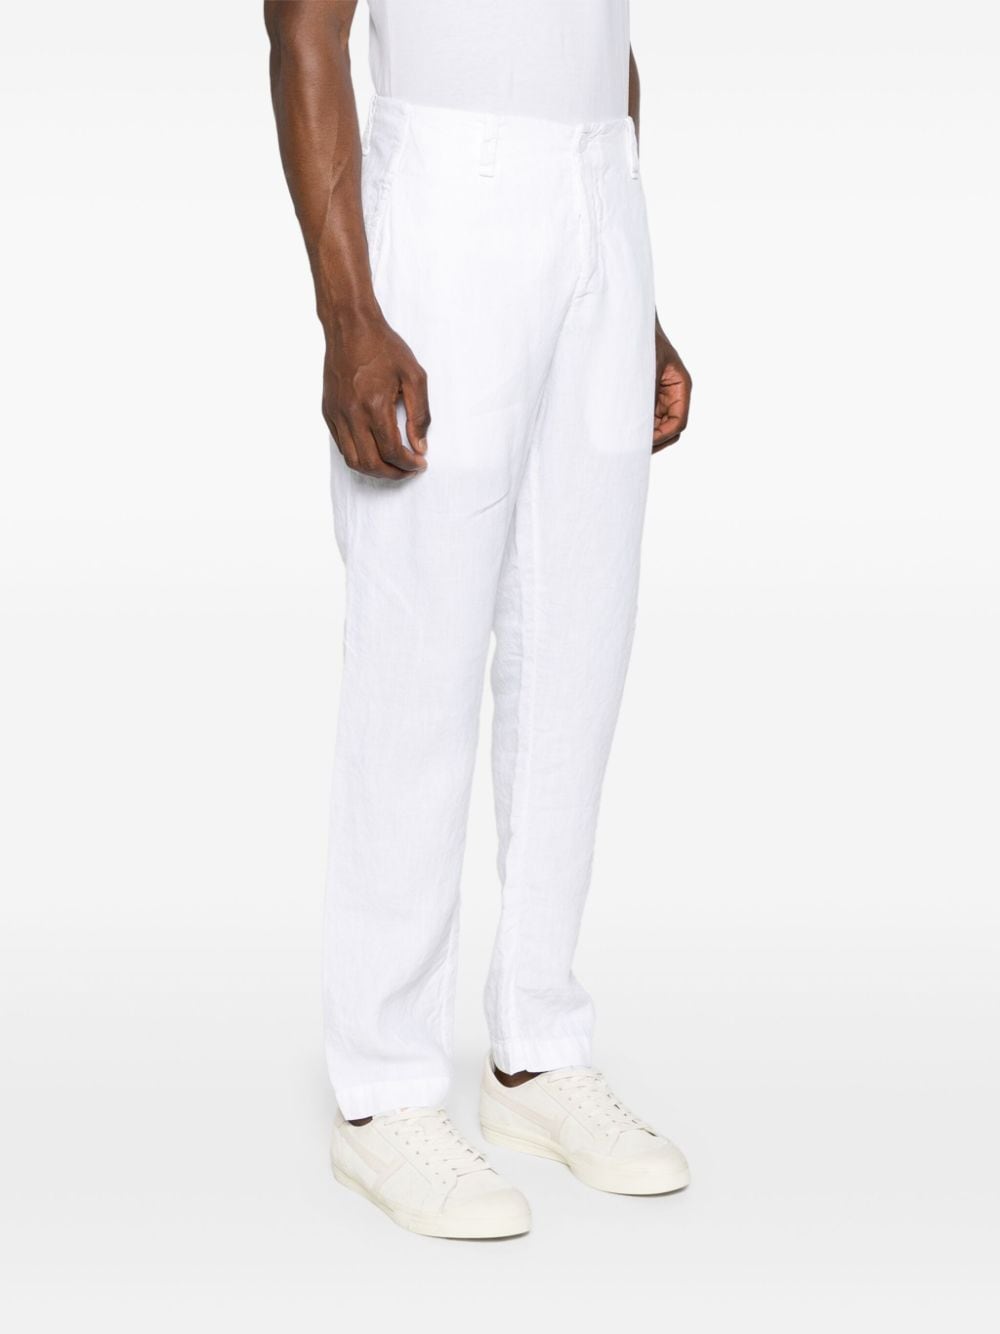 Pantalone Chino bianco in lino